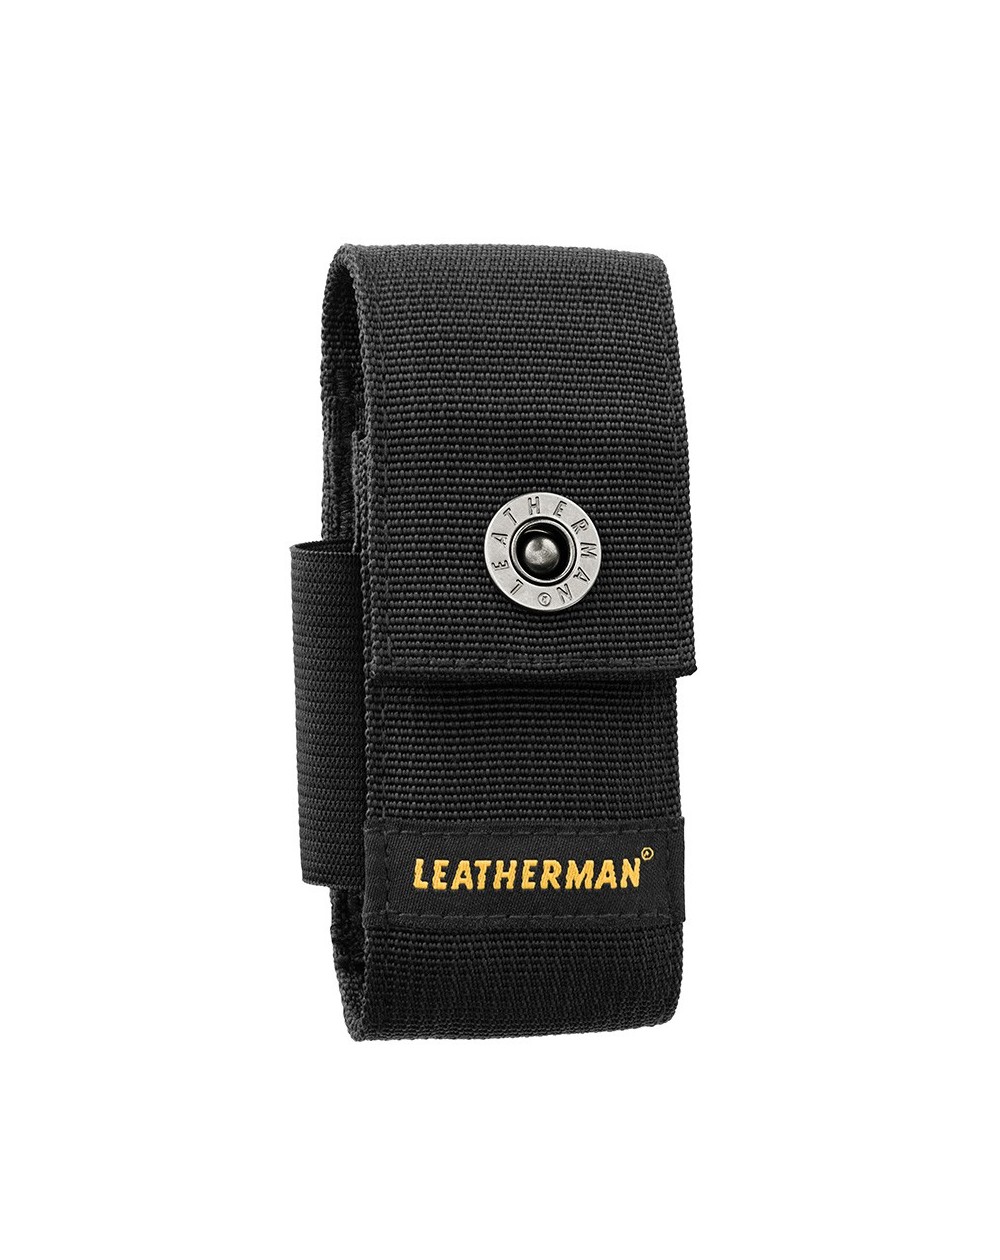 leatherman-etui-nylon-noir-poche-bit-kit-charge-rev-934932